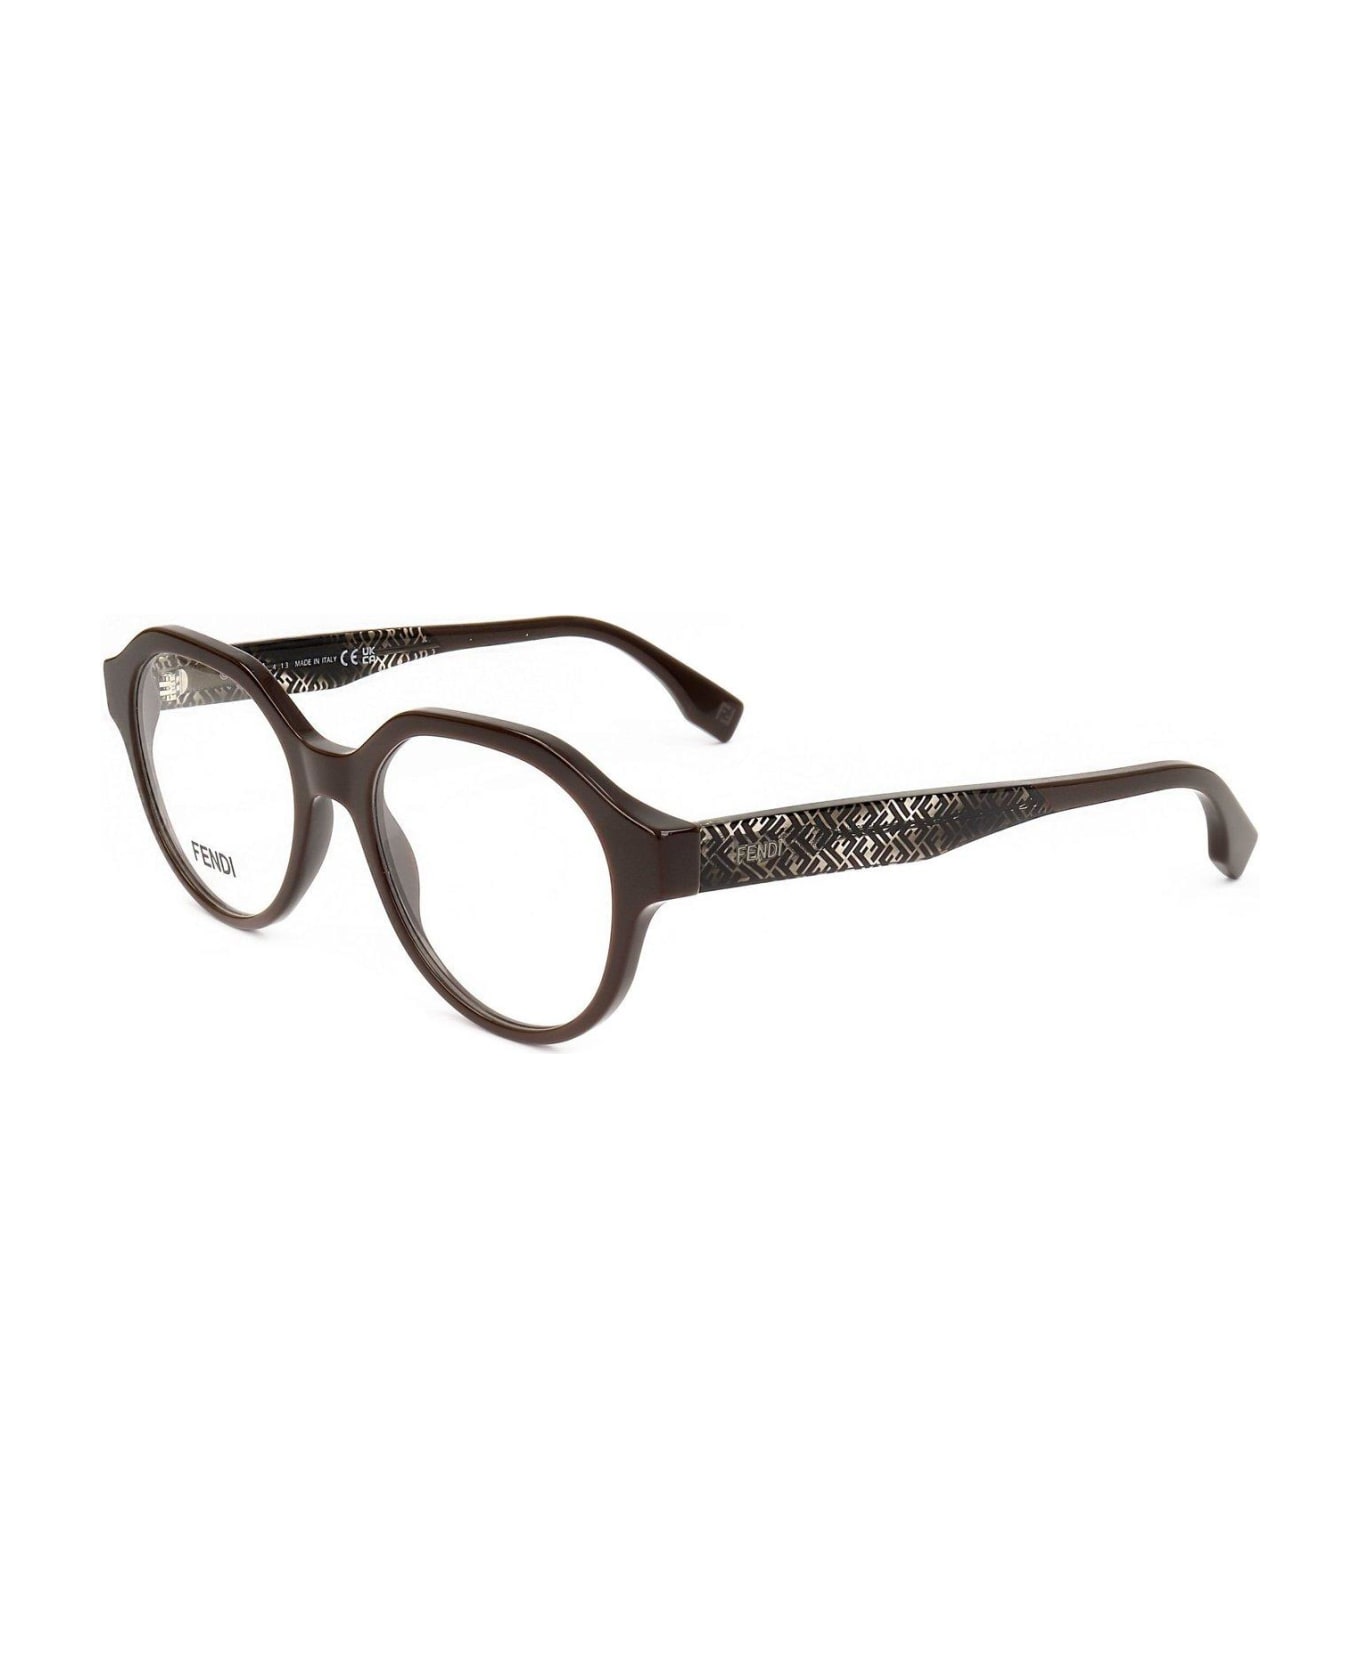 Fendi Eyewear Round Frame Glasses - 050